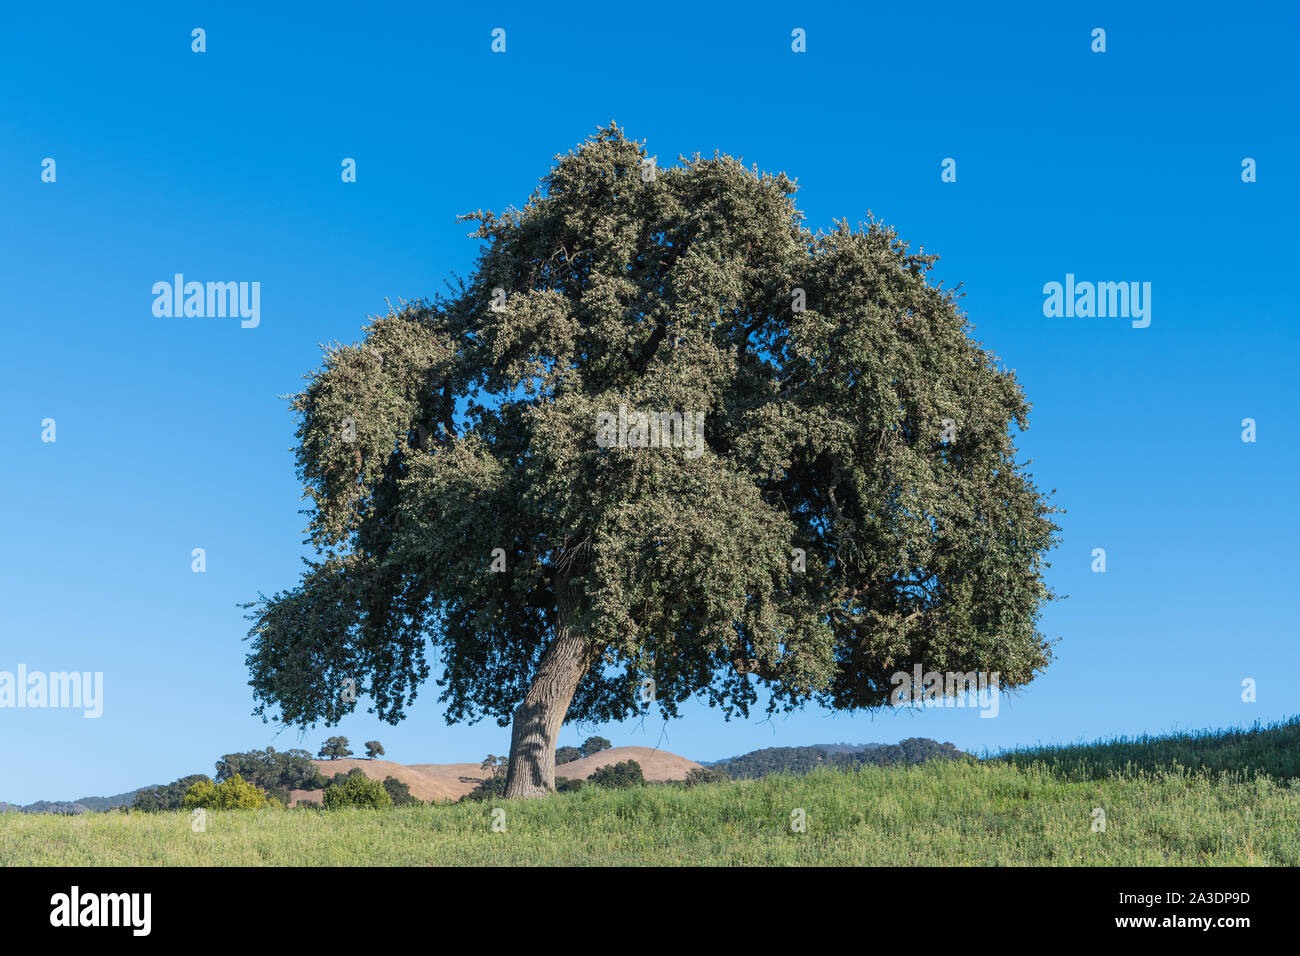 Coastal live oak tree in a field in the Santa Ynez Valley of central California Stock Photo